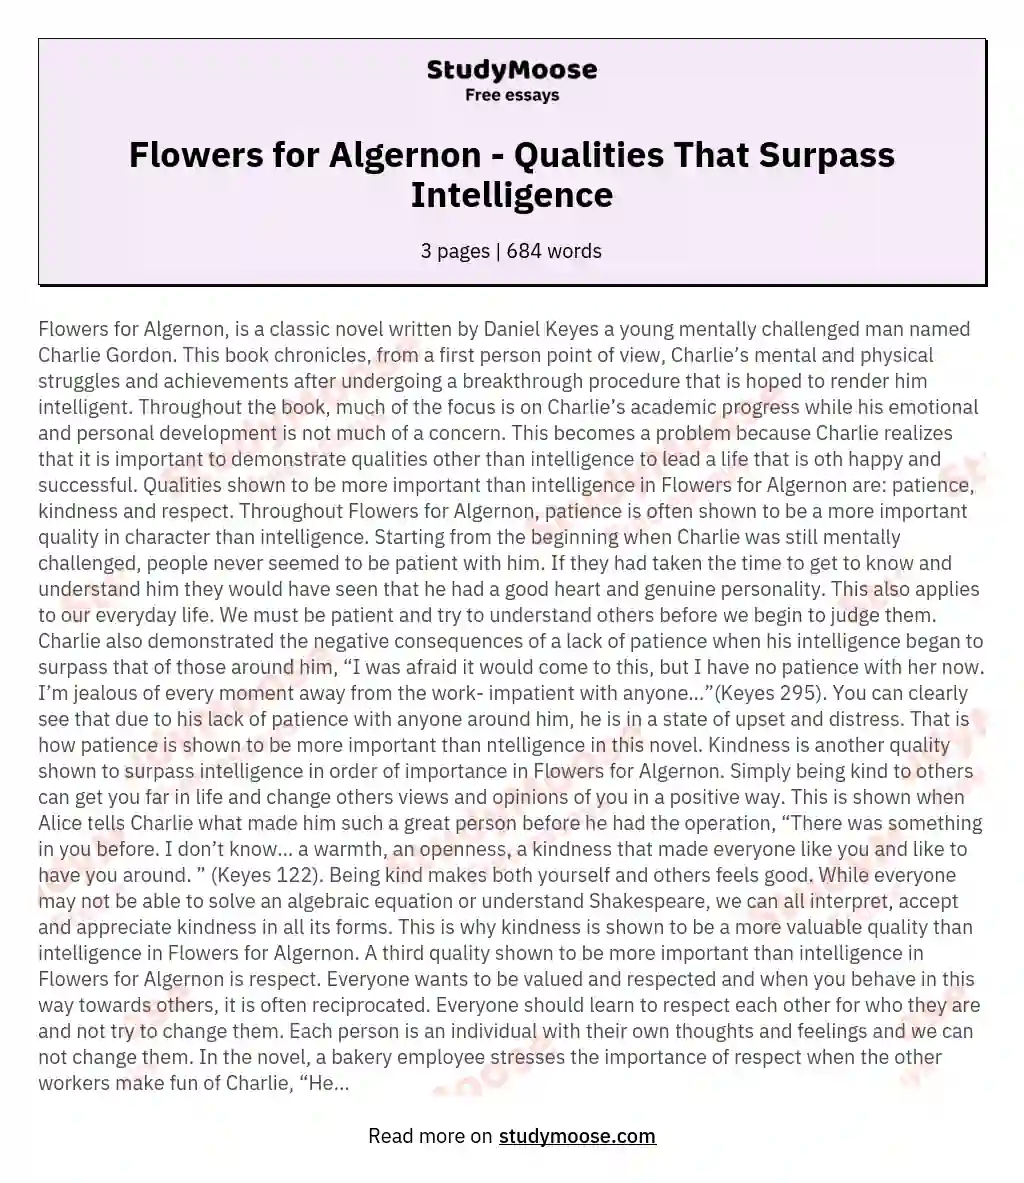 Flowers for Algernon - Qualities That Surpass Intelligence essay